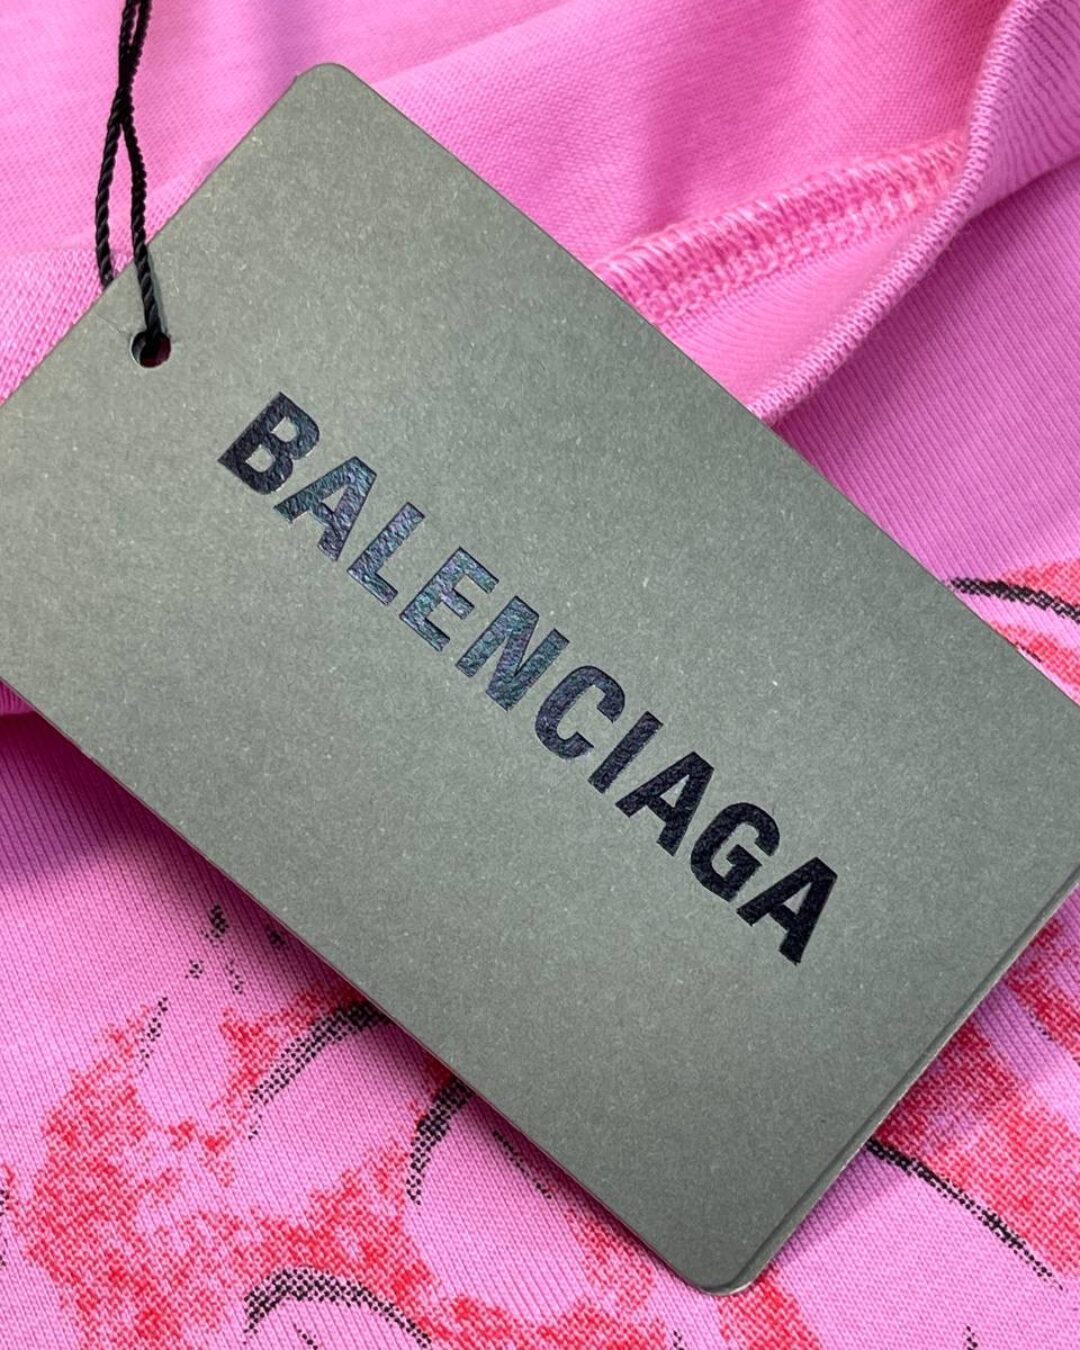 Кофта Balenciaga 9